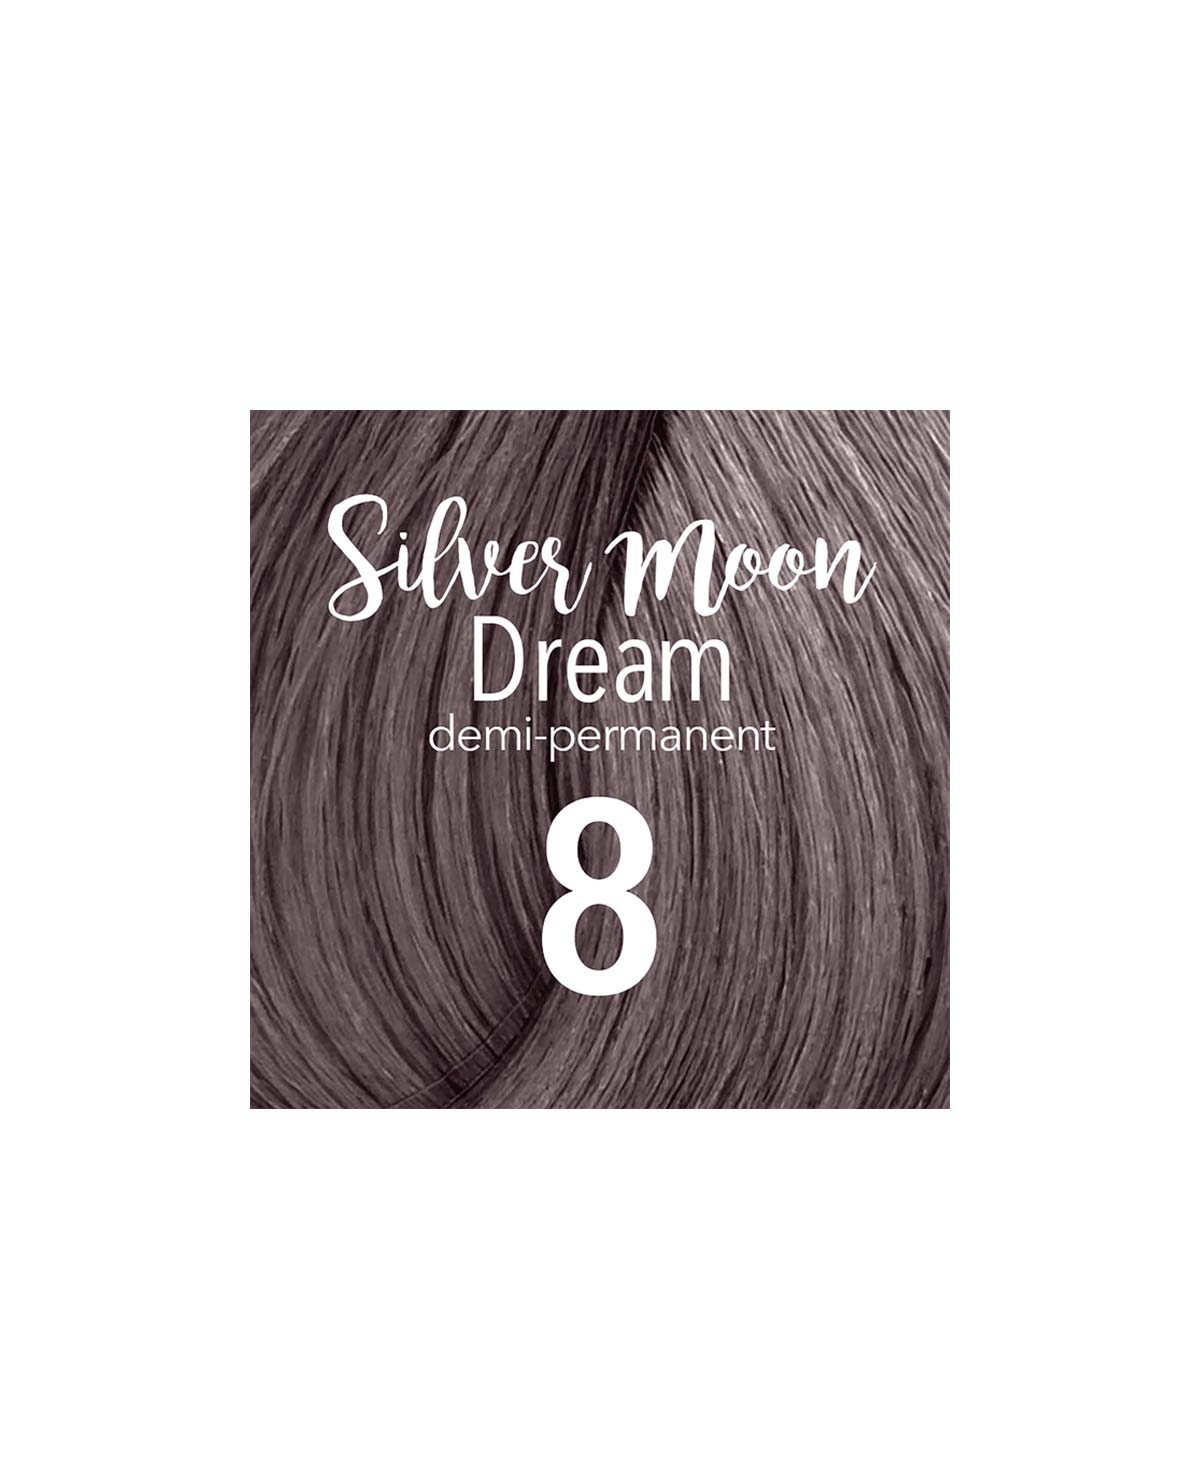 Mydentity - 8 Silver Moon Dream Blonde Demi-P